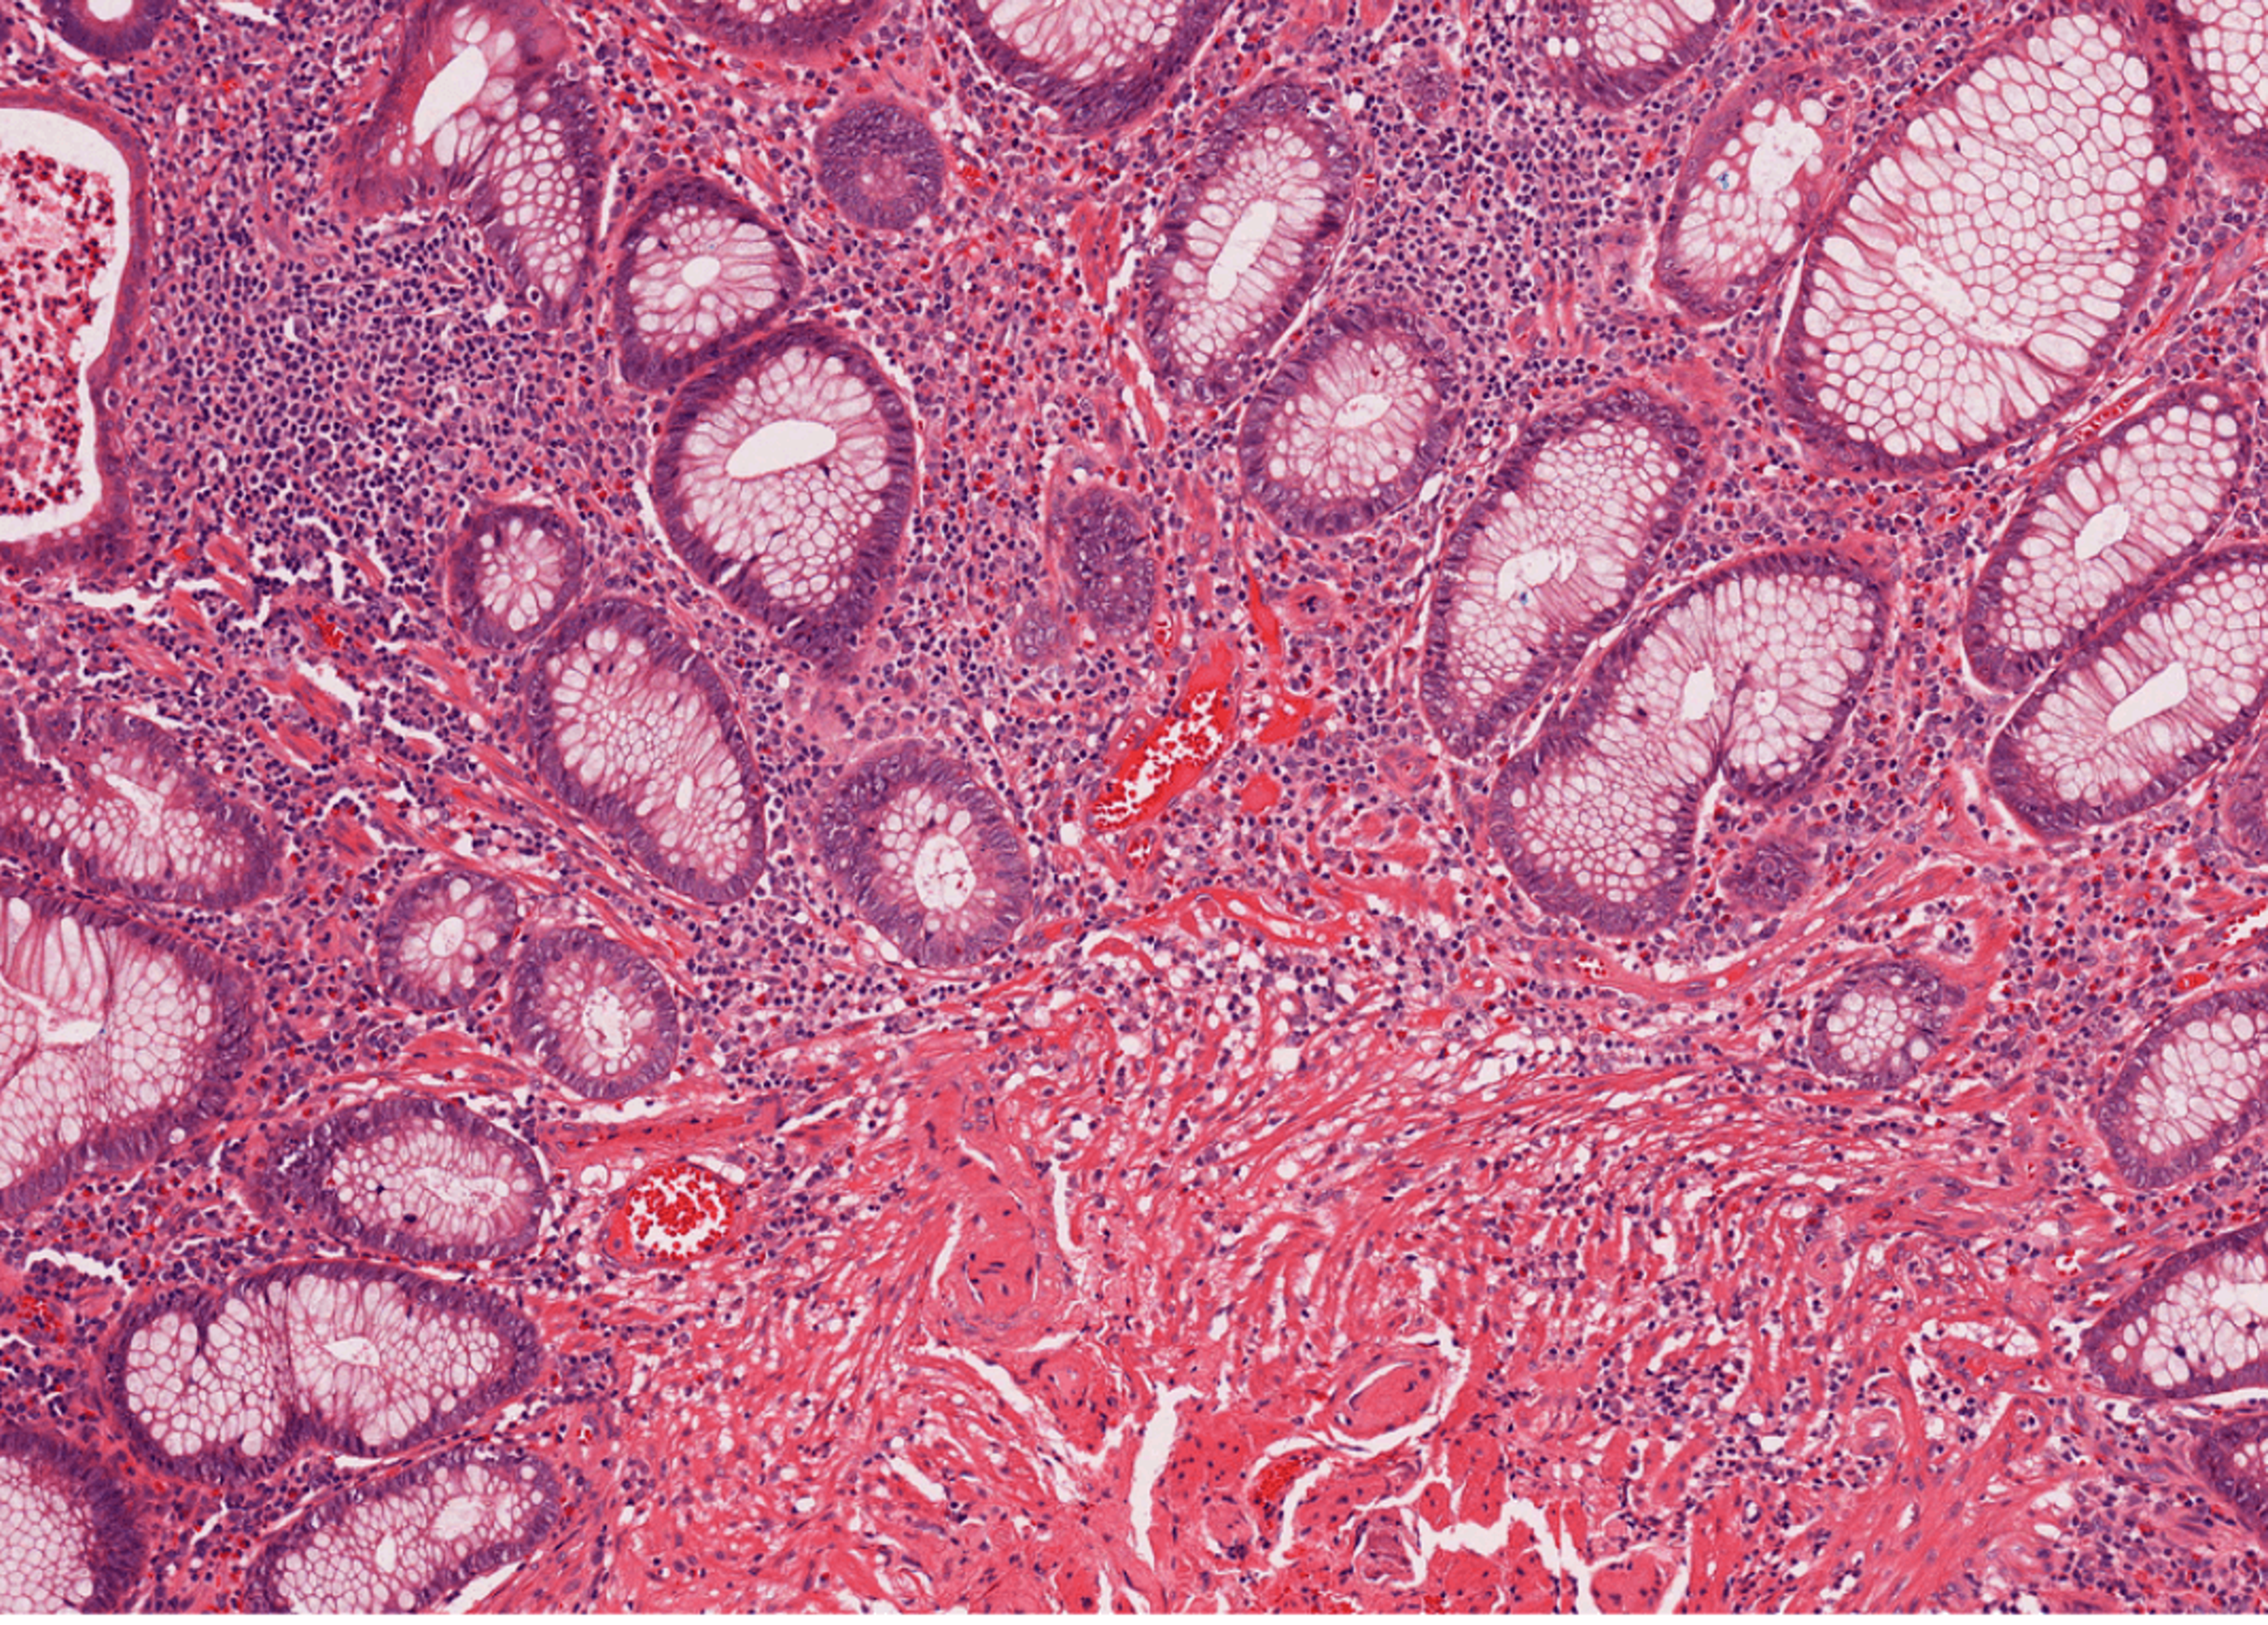 Microscopy image: Cells under a microscope